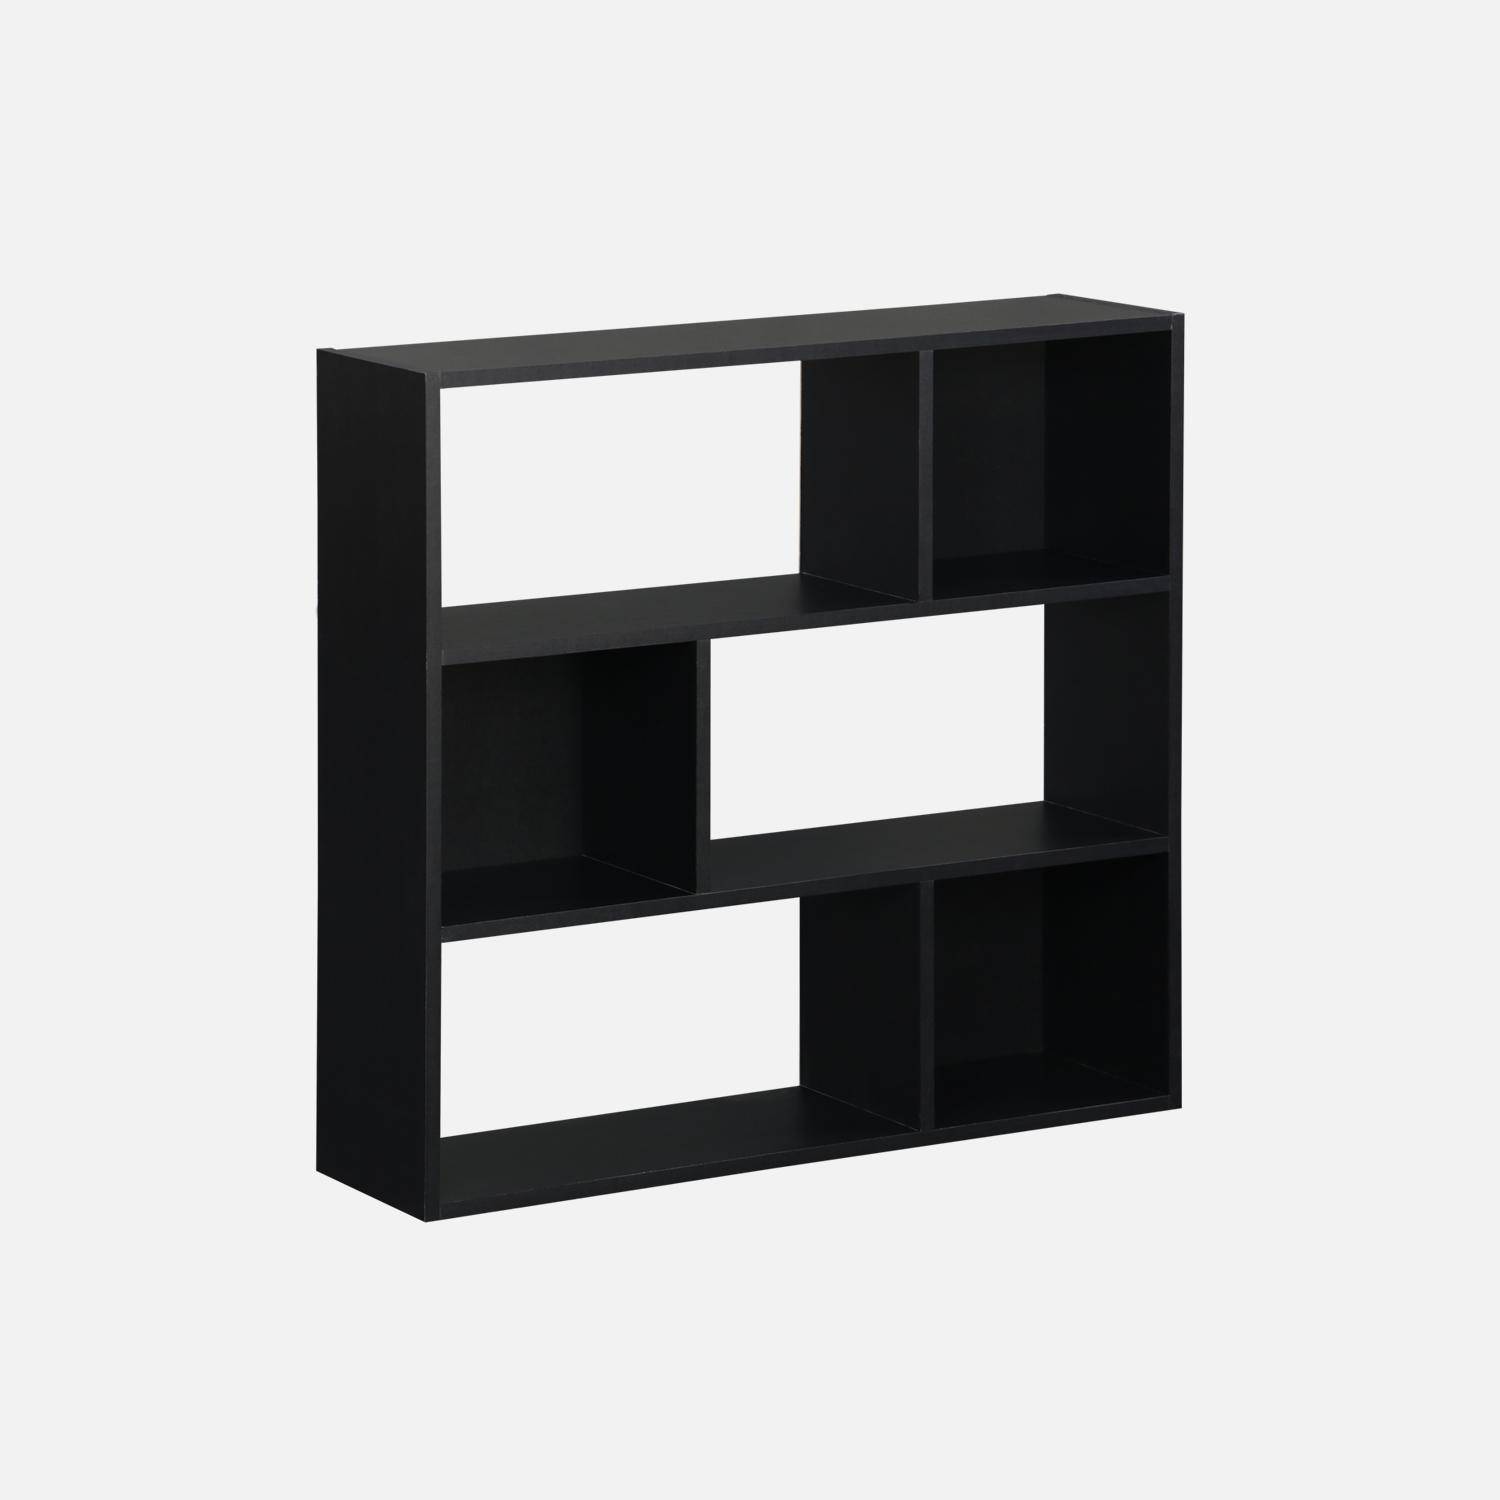 3-shelf bookcase with 6 compartments, black,  L83xW23xH80cm, Pieter,sweeek,Photo1